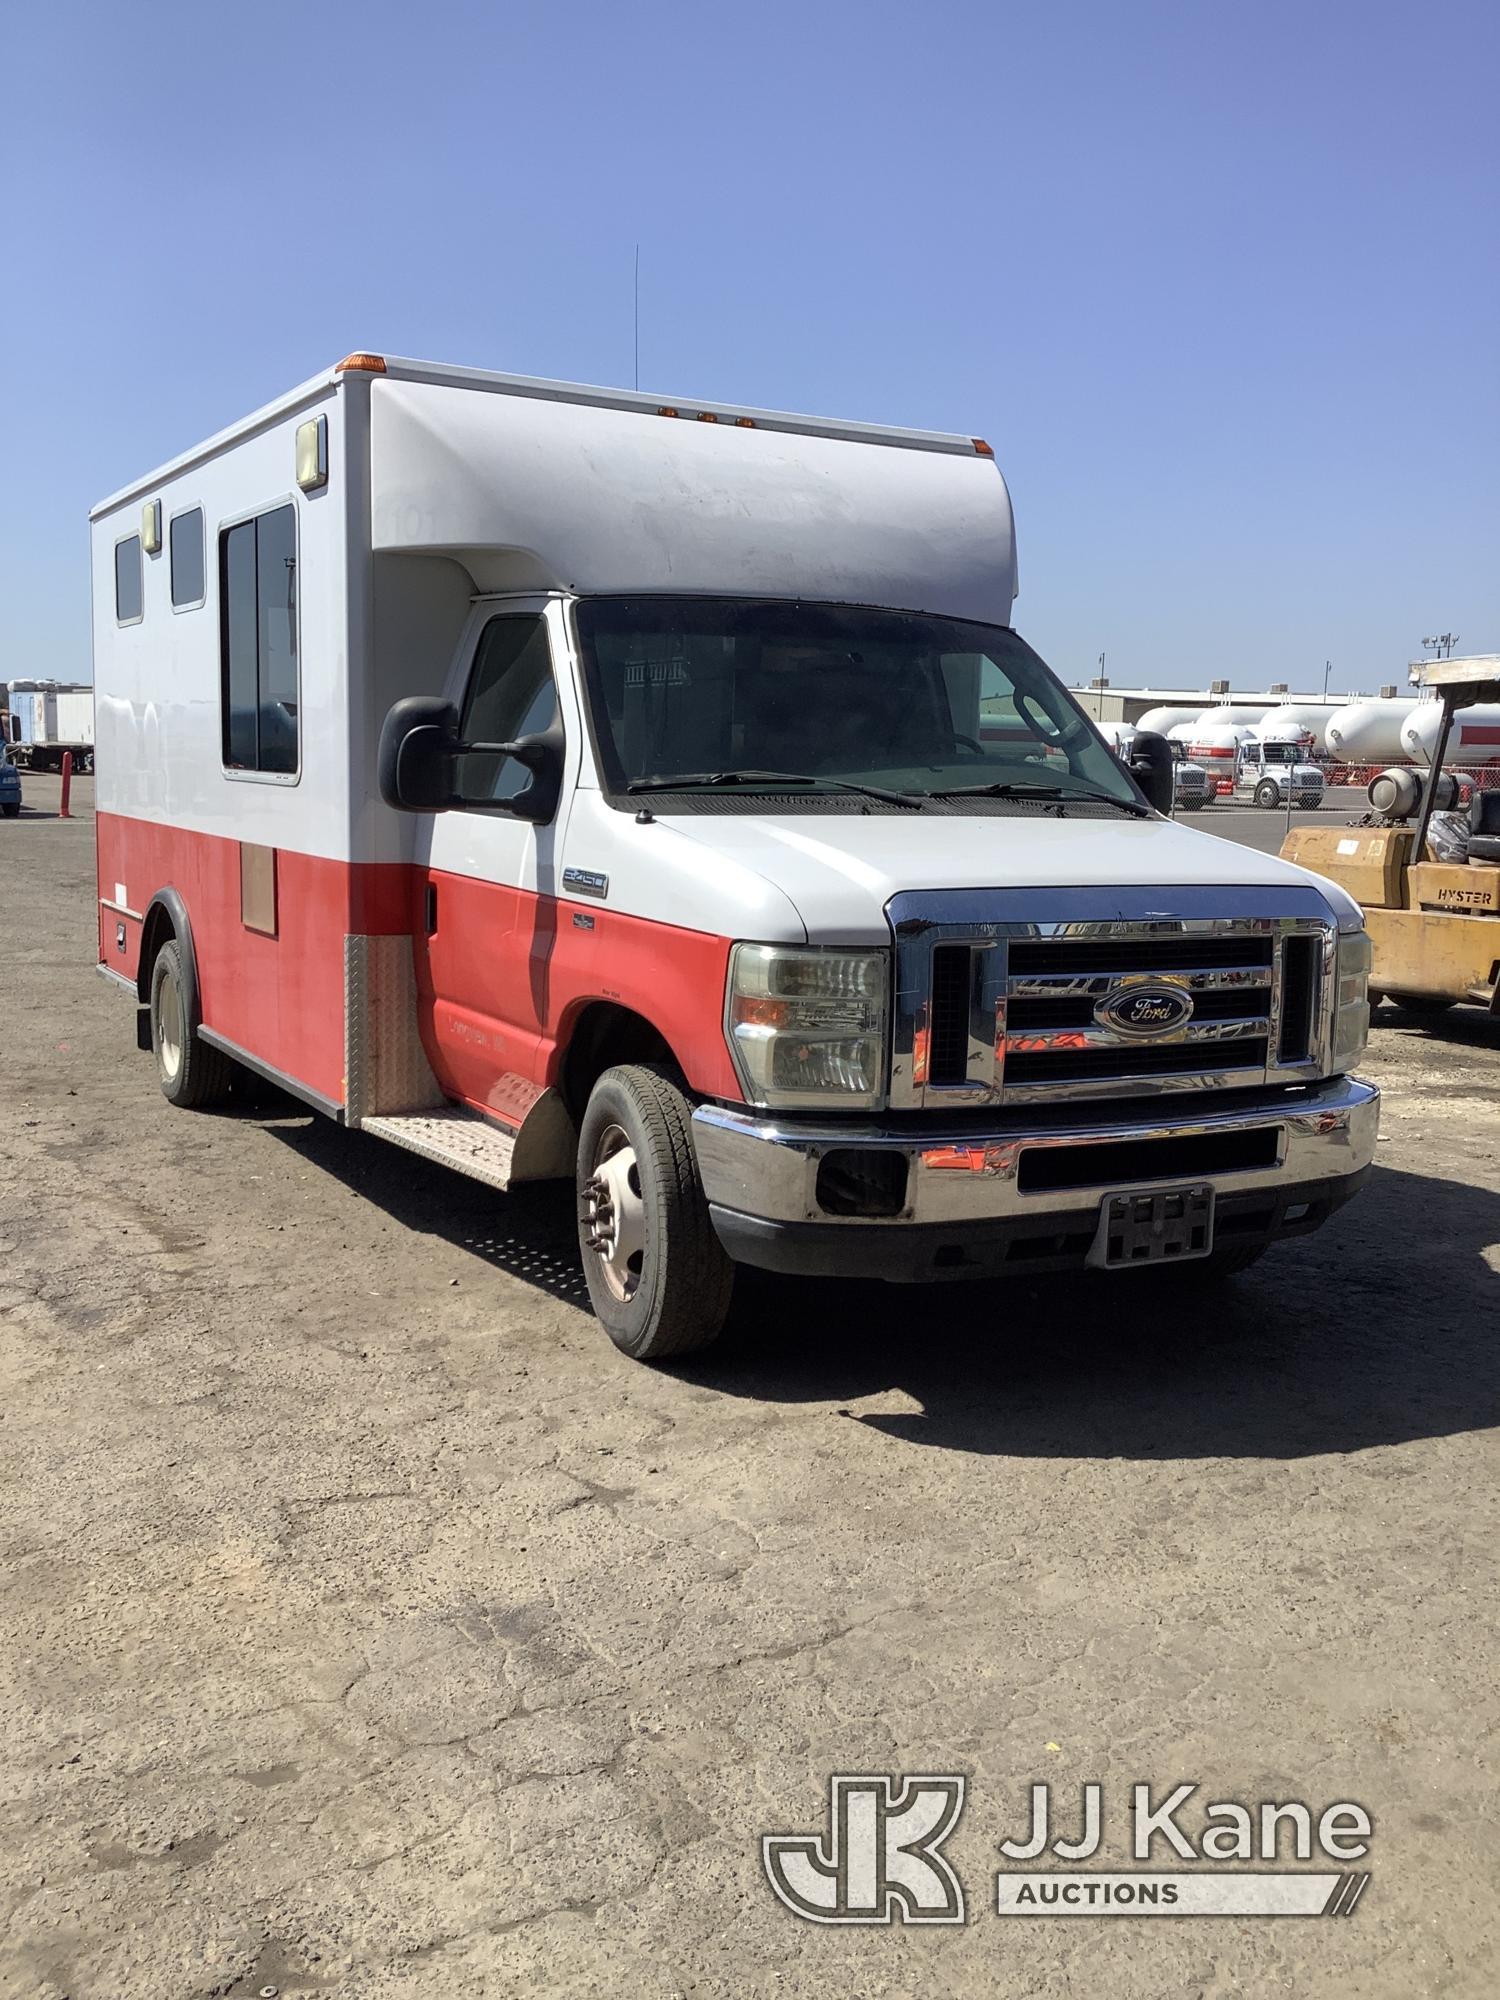 (Fresno, CA) 2008 Ford E450 Ambulance/Rescue Vehicle Jump to Start) (Minor Body Damage, Rust Damage,